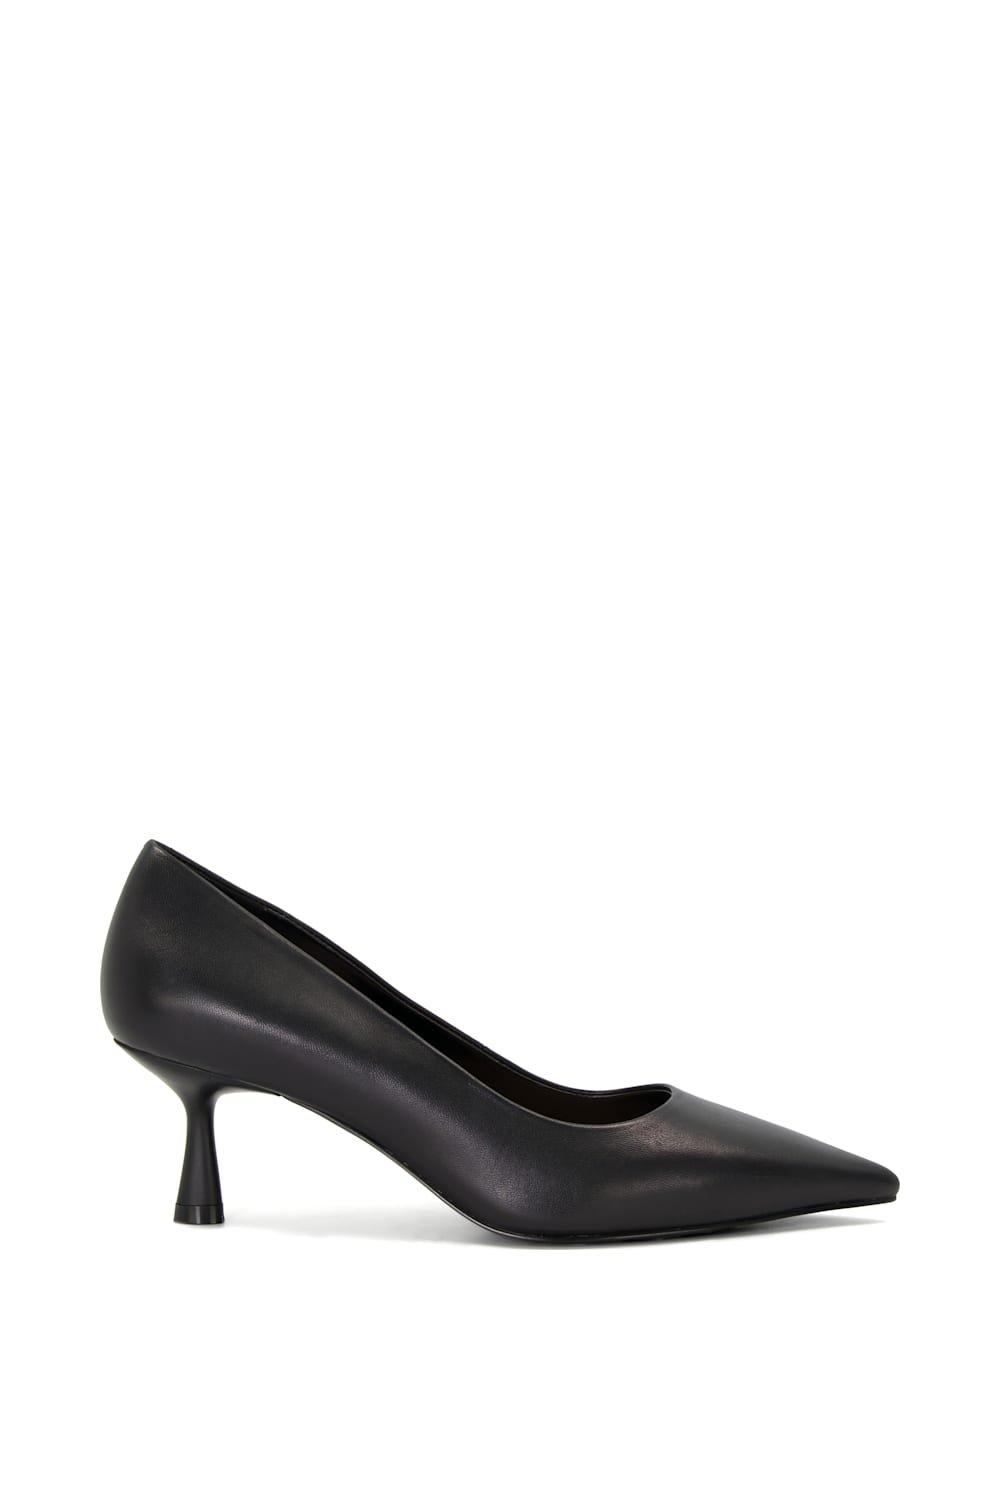 Heels | 'Angelina' Leather Court Shoes | Dune London